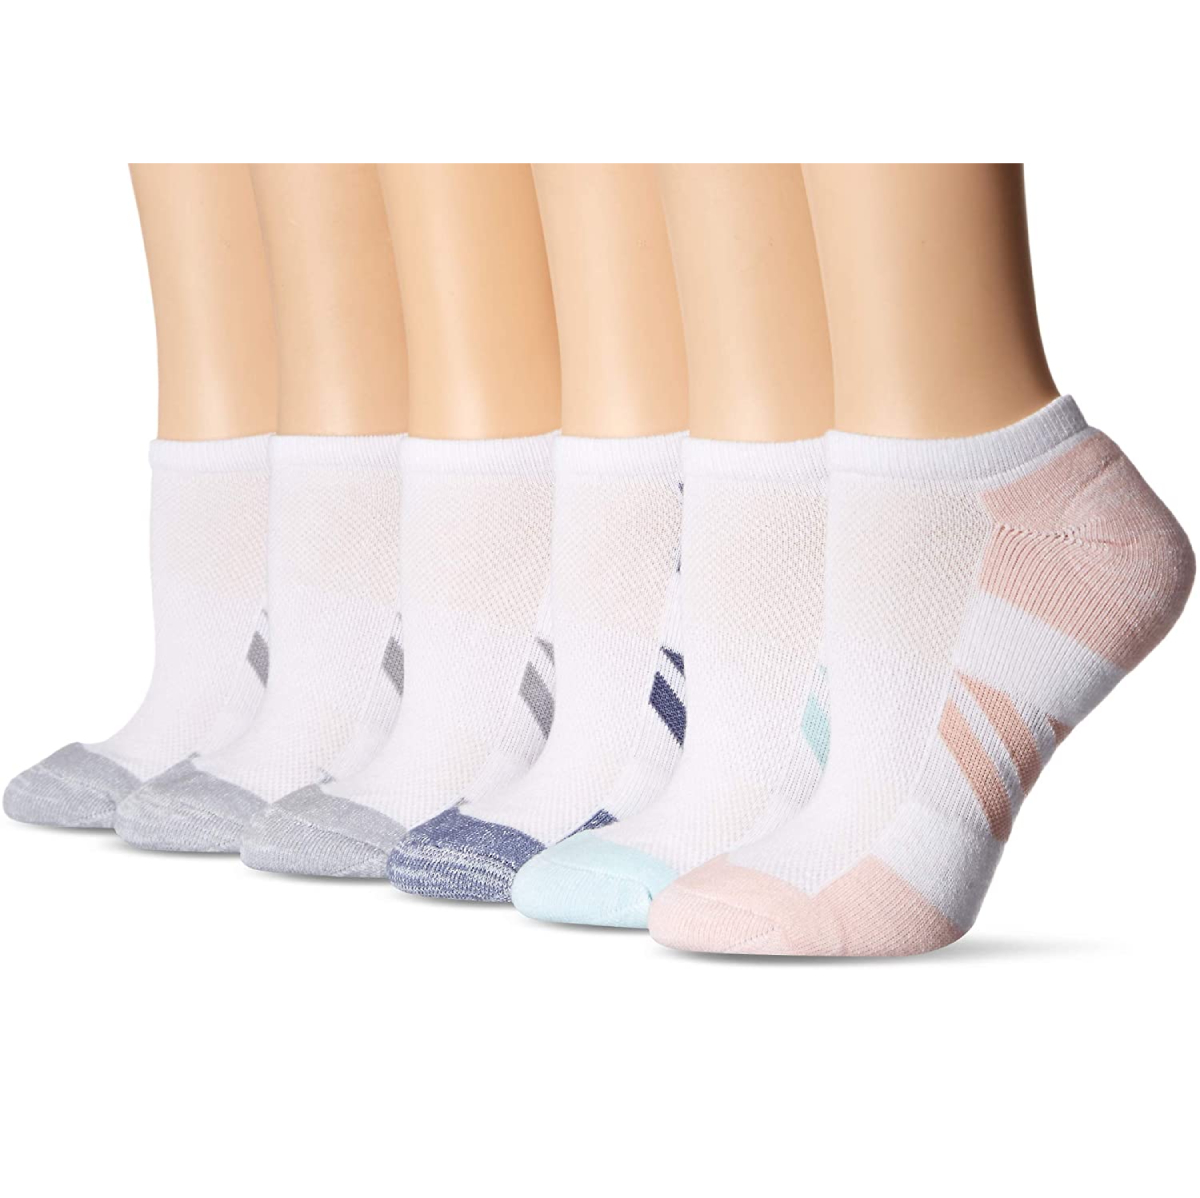 Fuzzy Moisturizing Heel Socks with Gel Treat Dry Cracked Heels – ZenToes